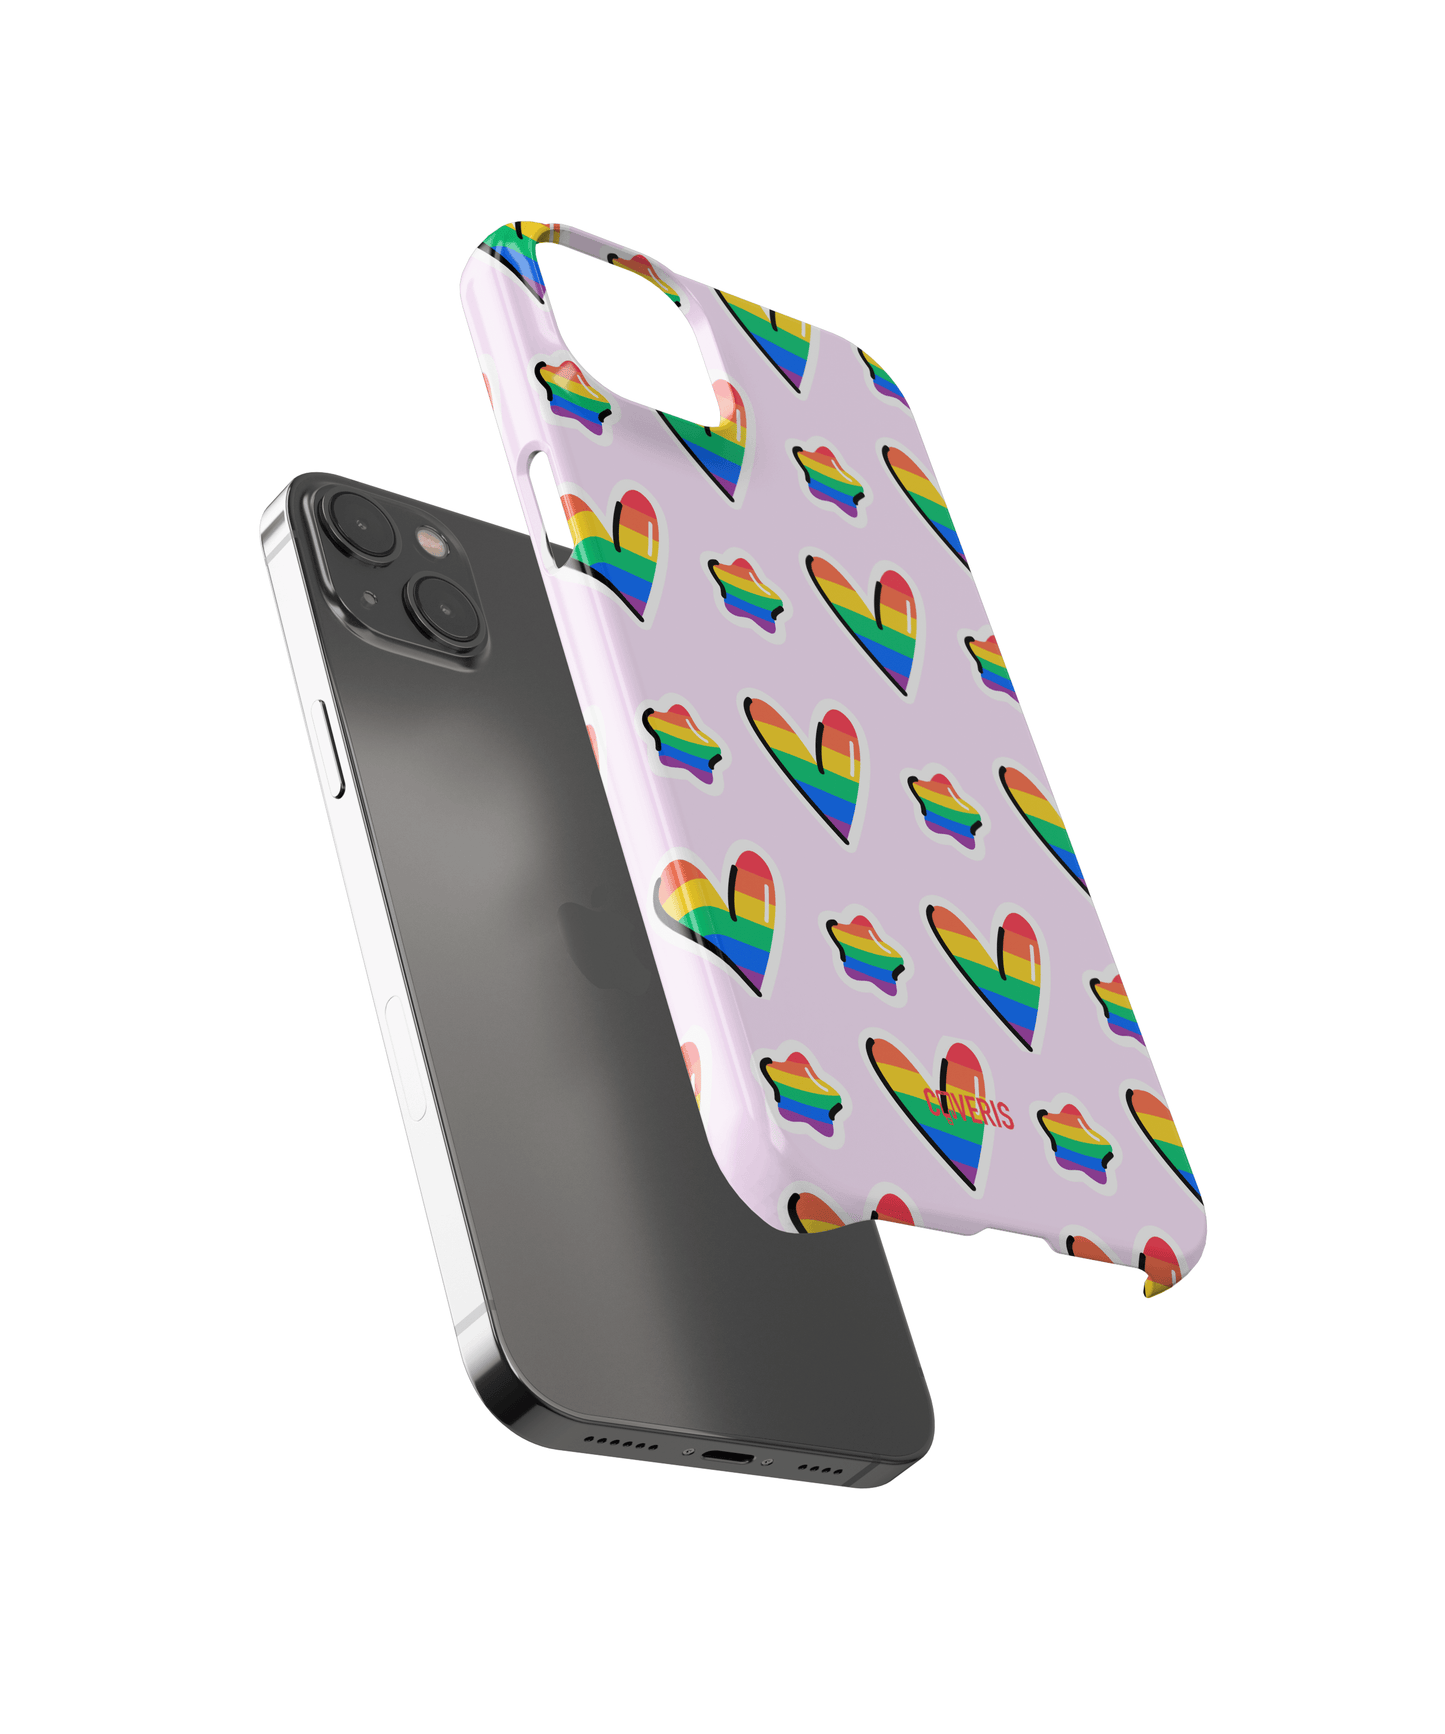 Soulmate - Google Pixel 3 XL phone case